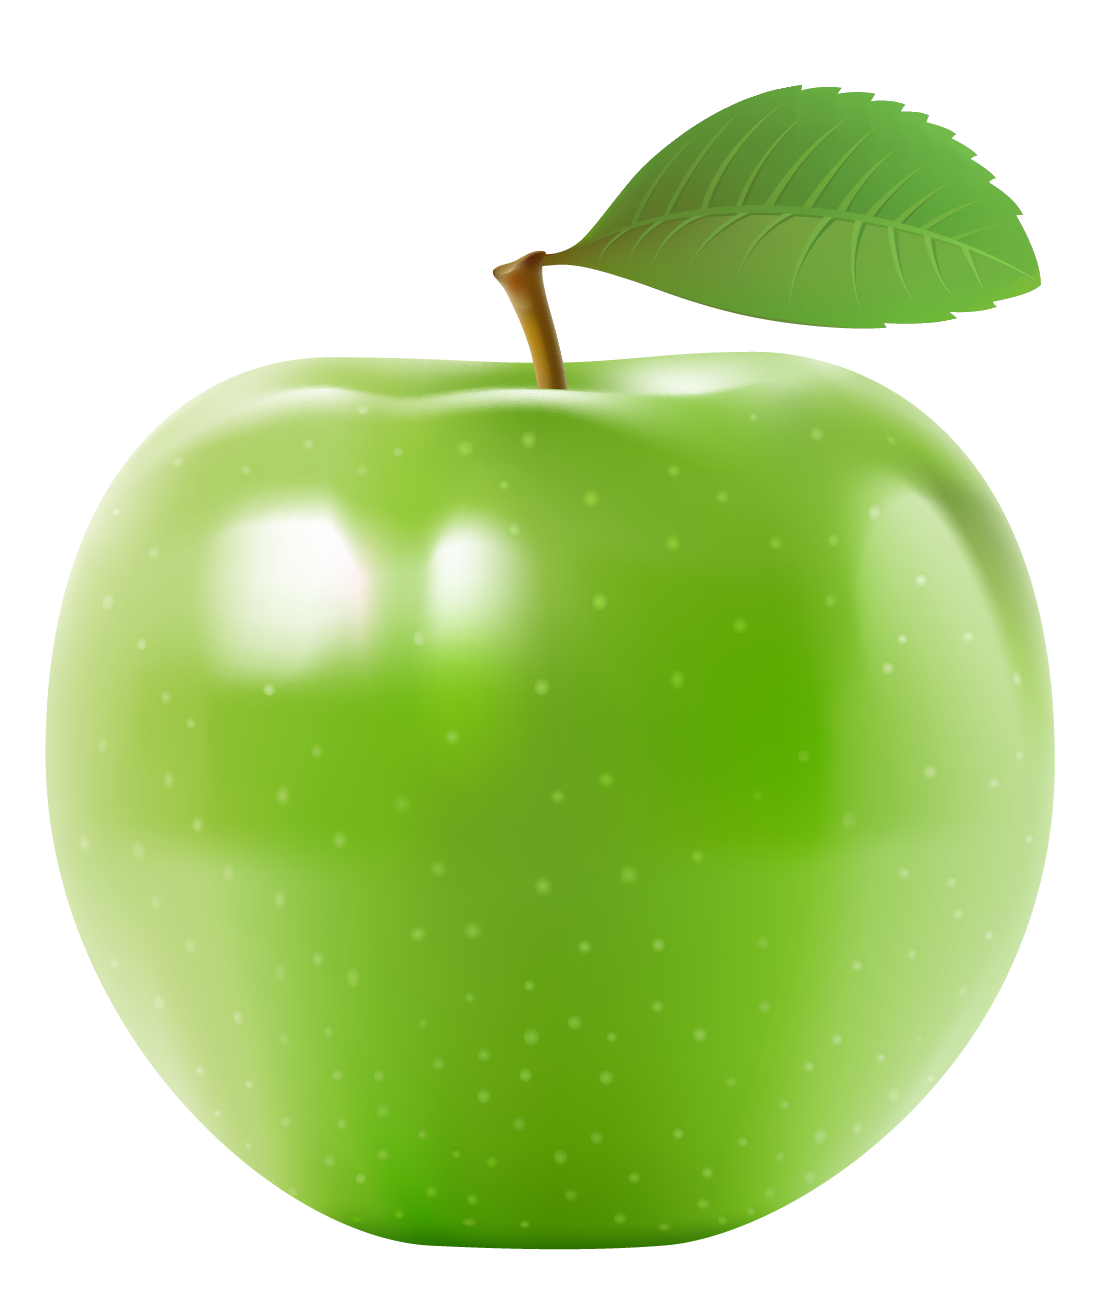 Grüner Apfel-PNG-Clipart